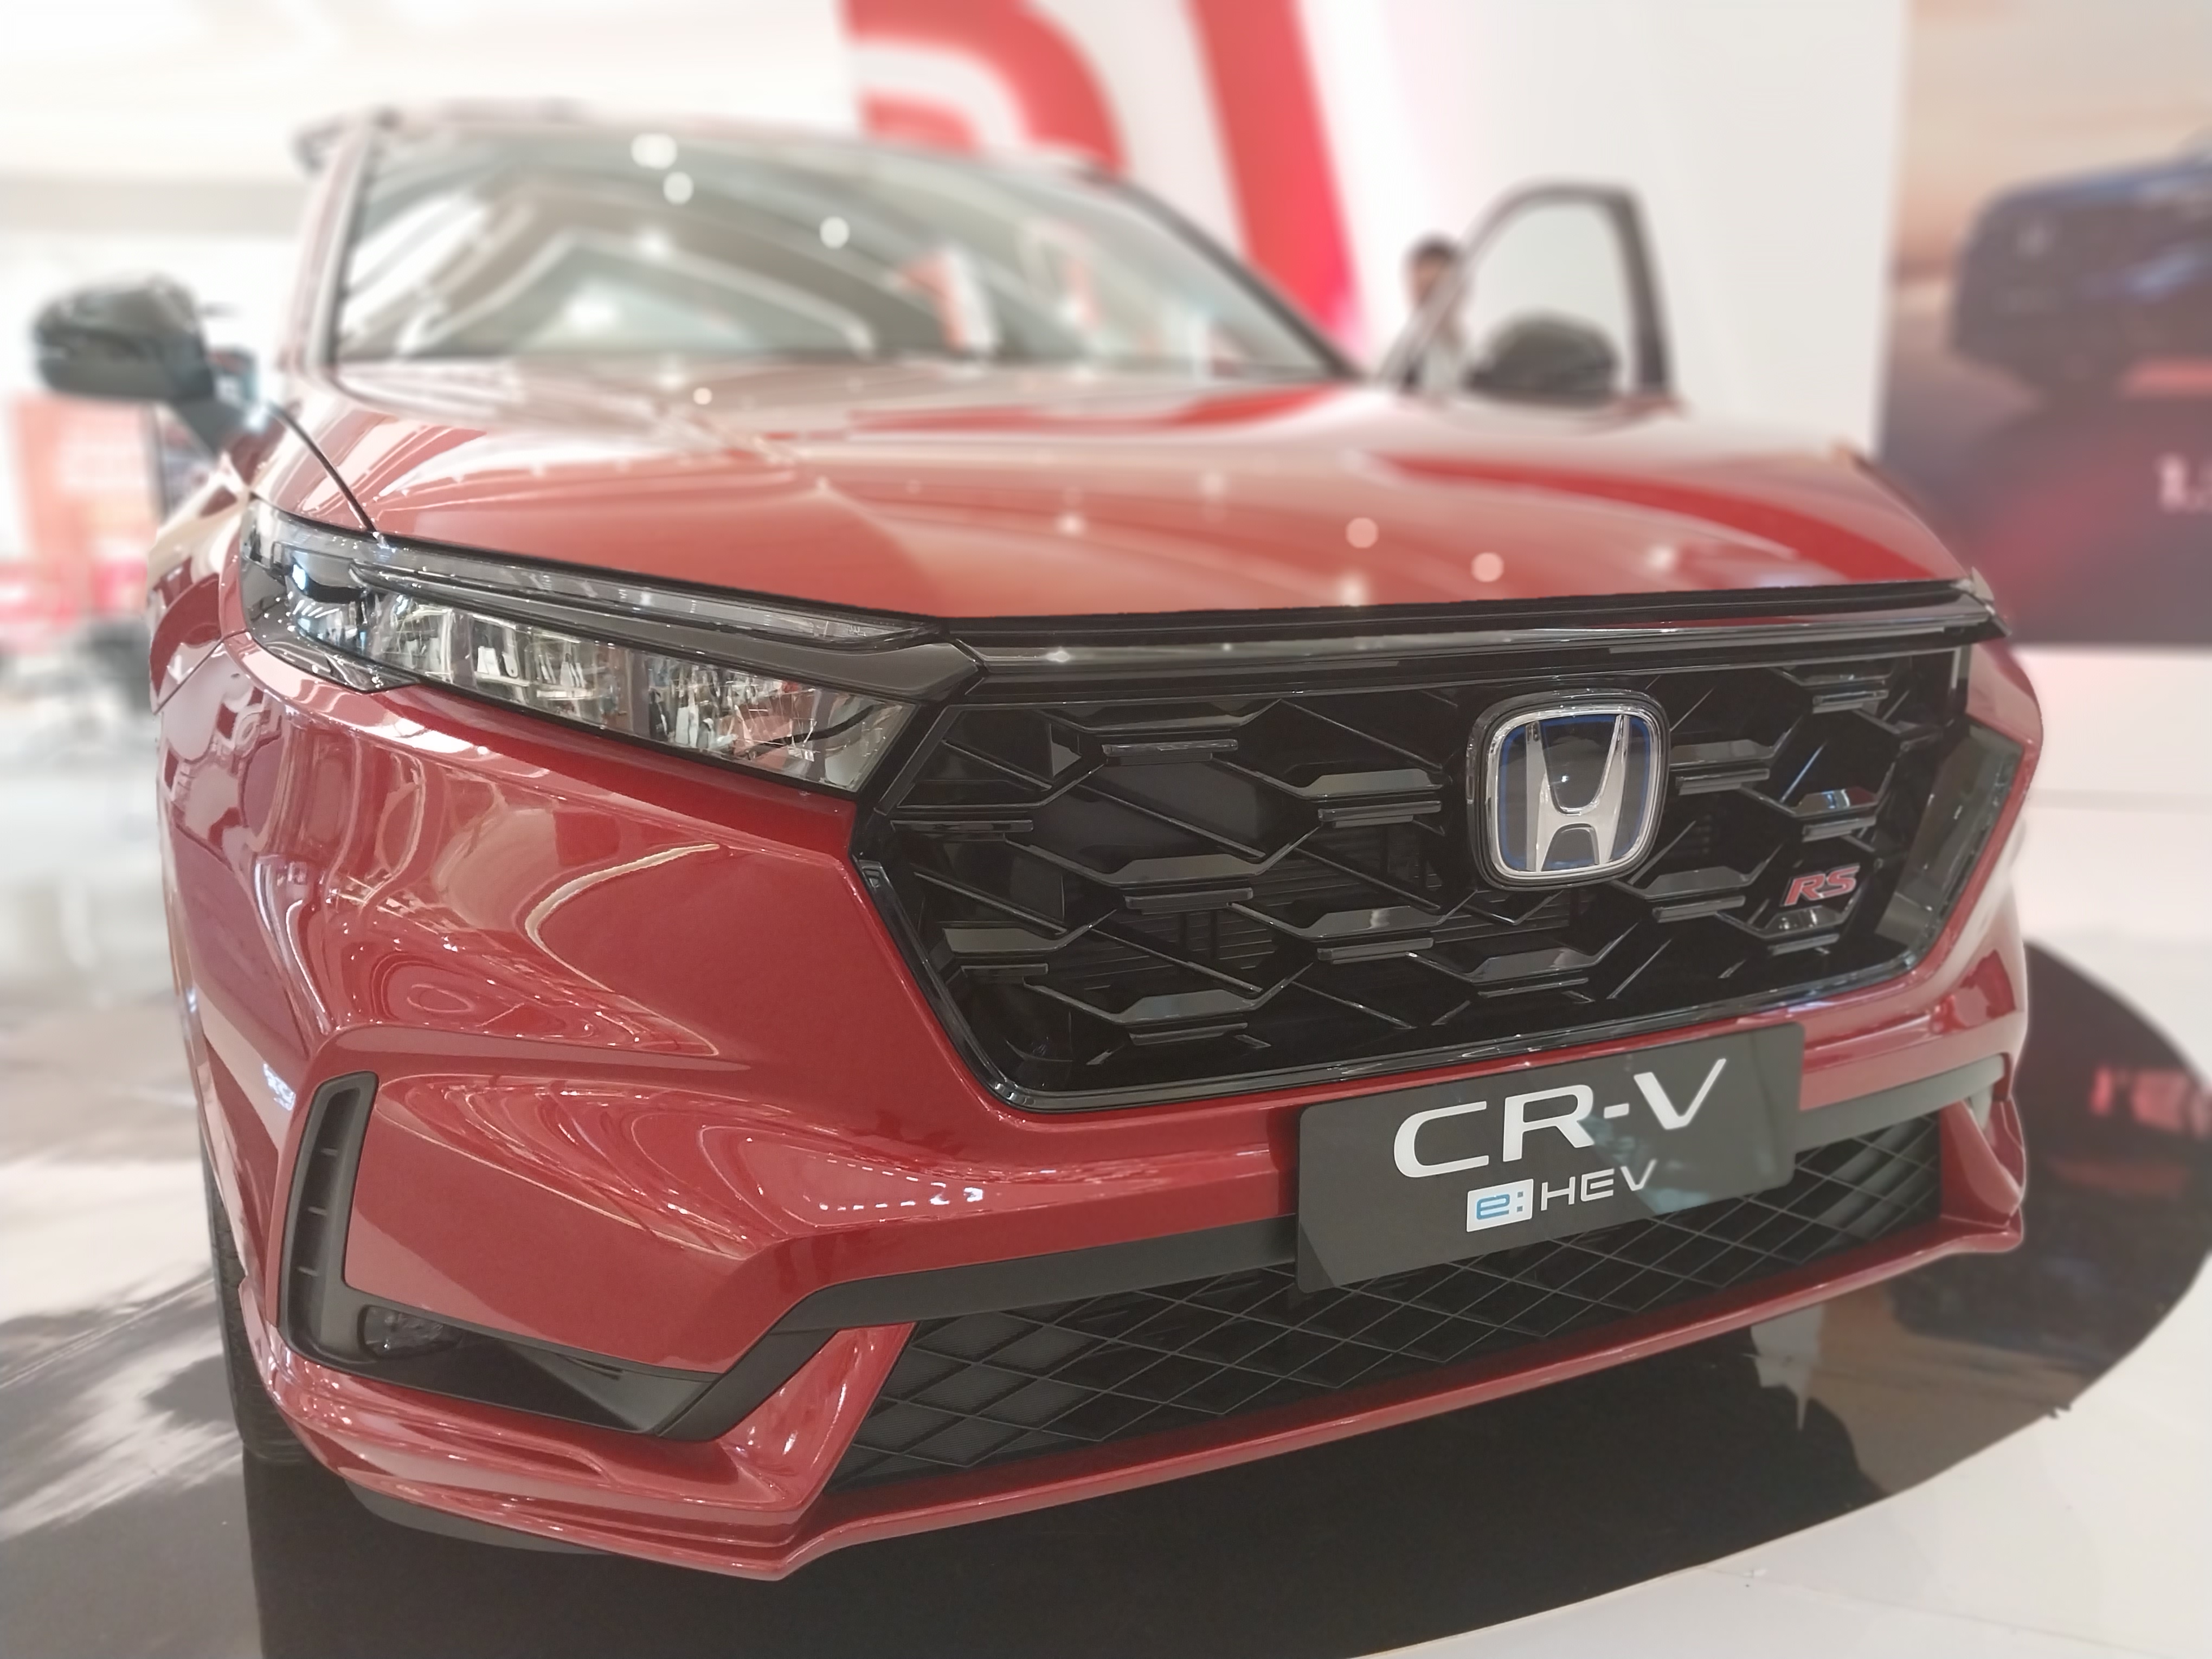 Promo CRV Hybrid